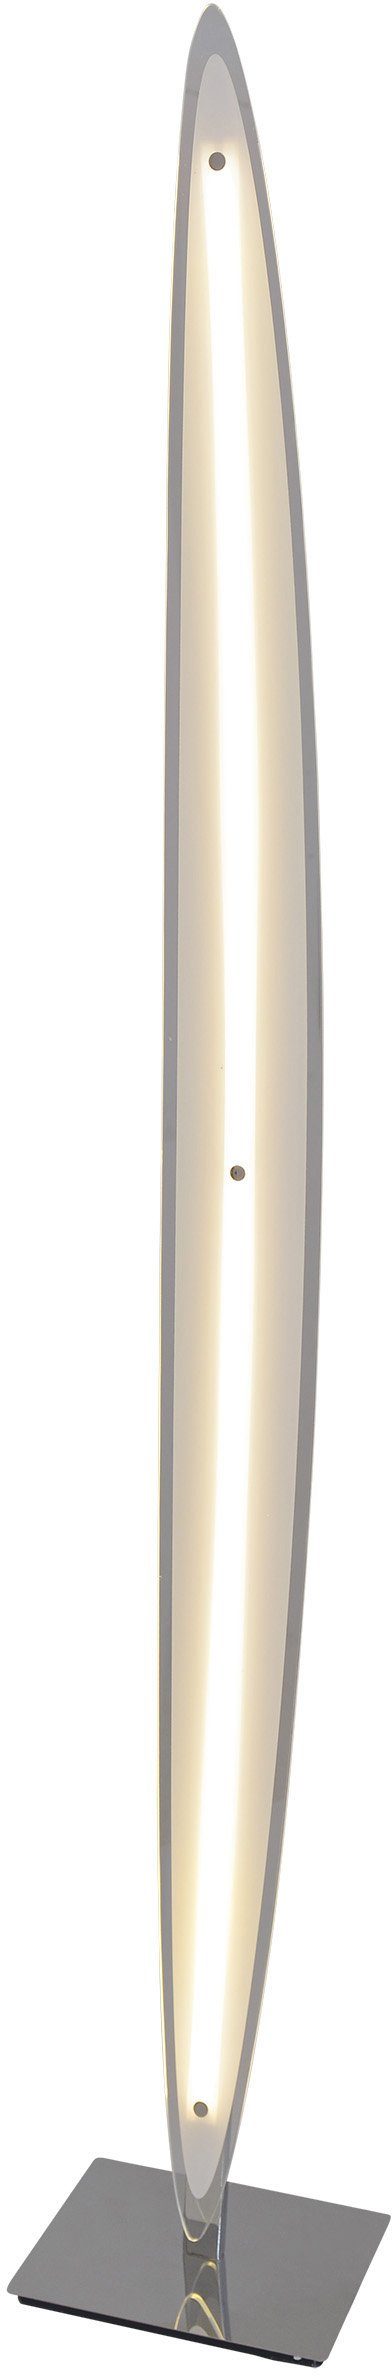 näve LED Warmweiß, fest 144 3000K; "Surf",dimmbar, Stehlampe 1850lm integriert, LED´s inkl. Surf, 29W LED total Dimmfunktion, Stehleuchte